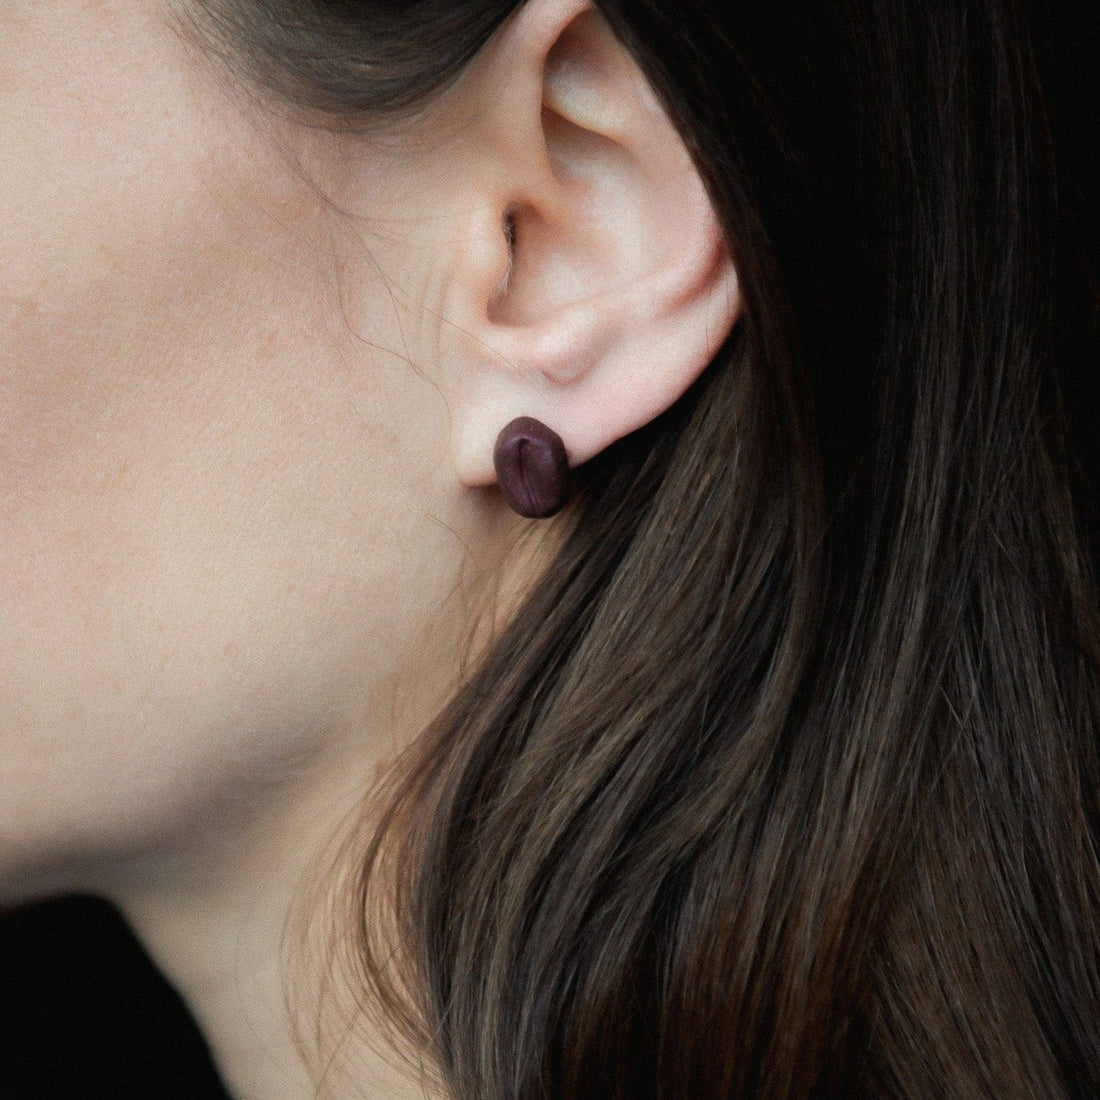 Bean earrings